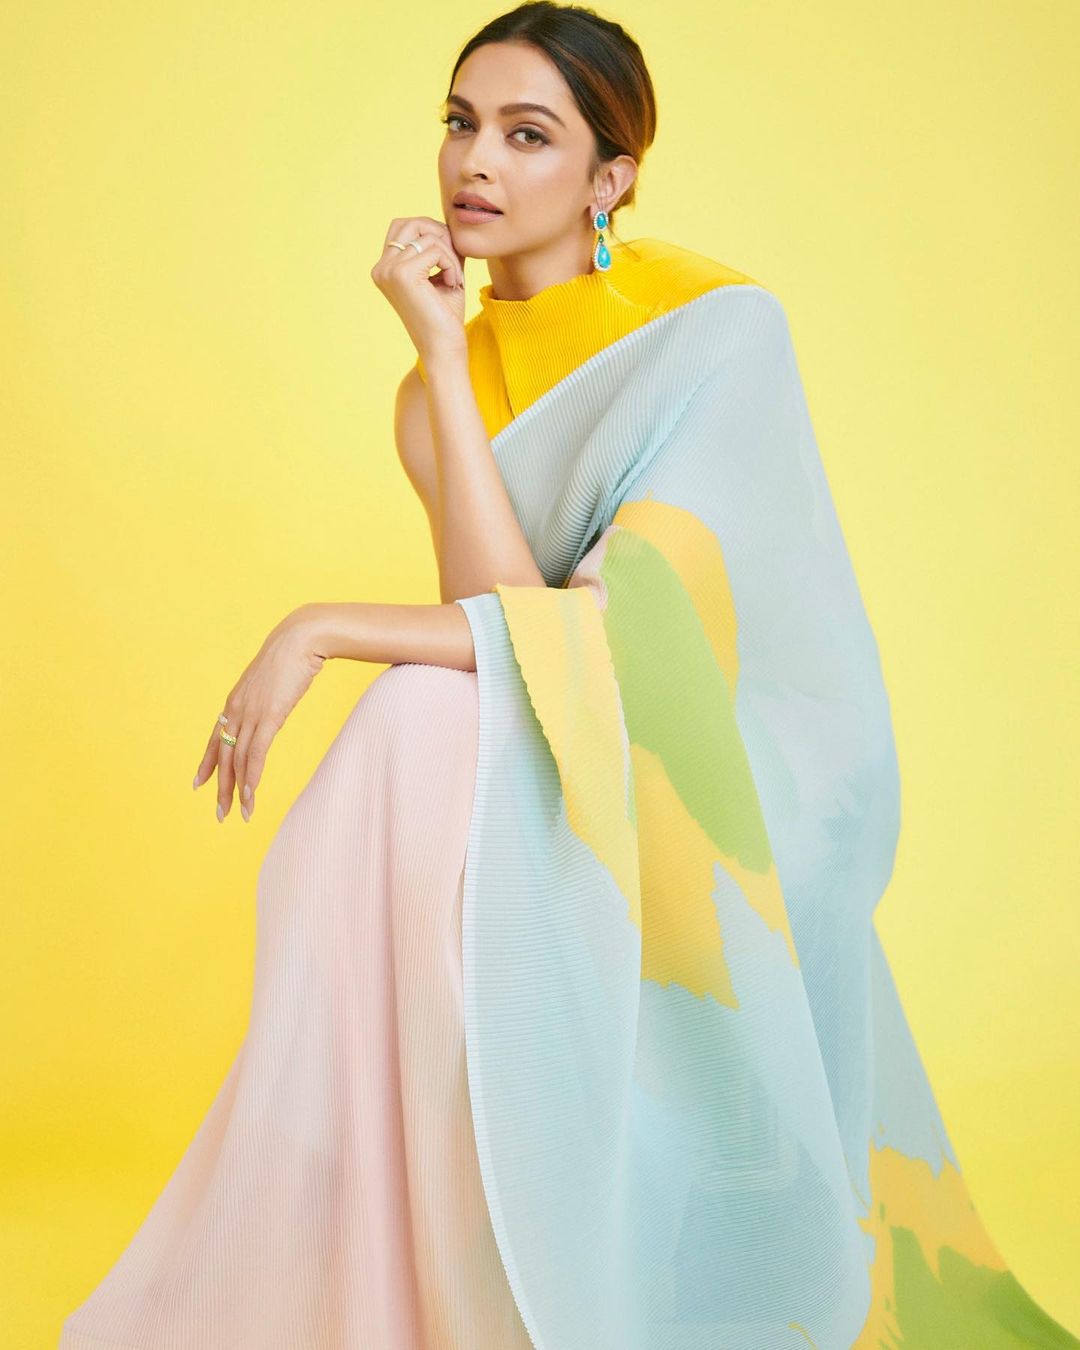 Deepika Padukone looks fresh in the pastel-coloured pleated saree